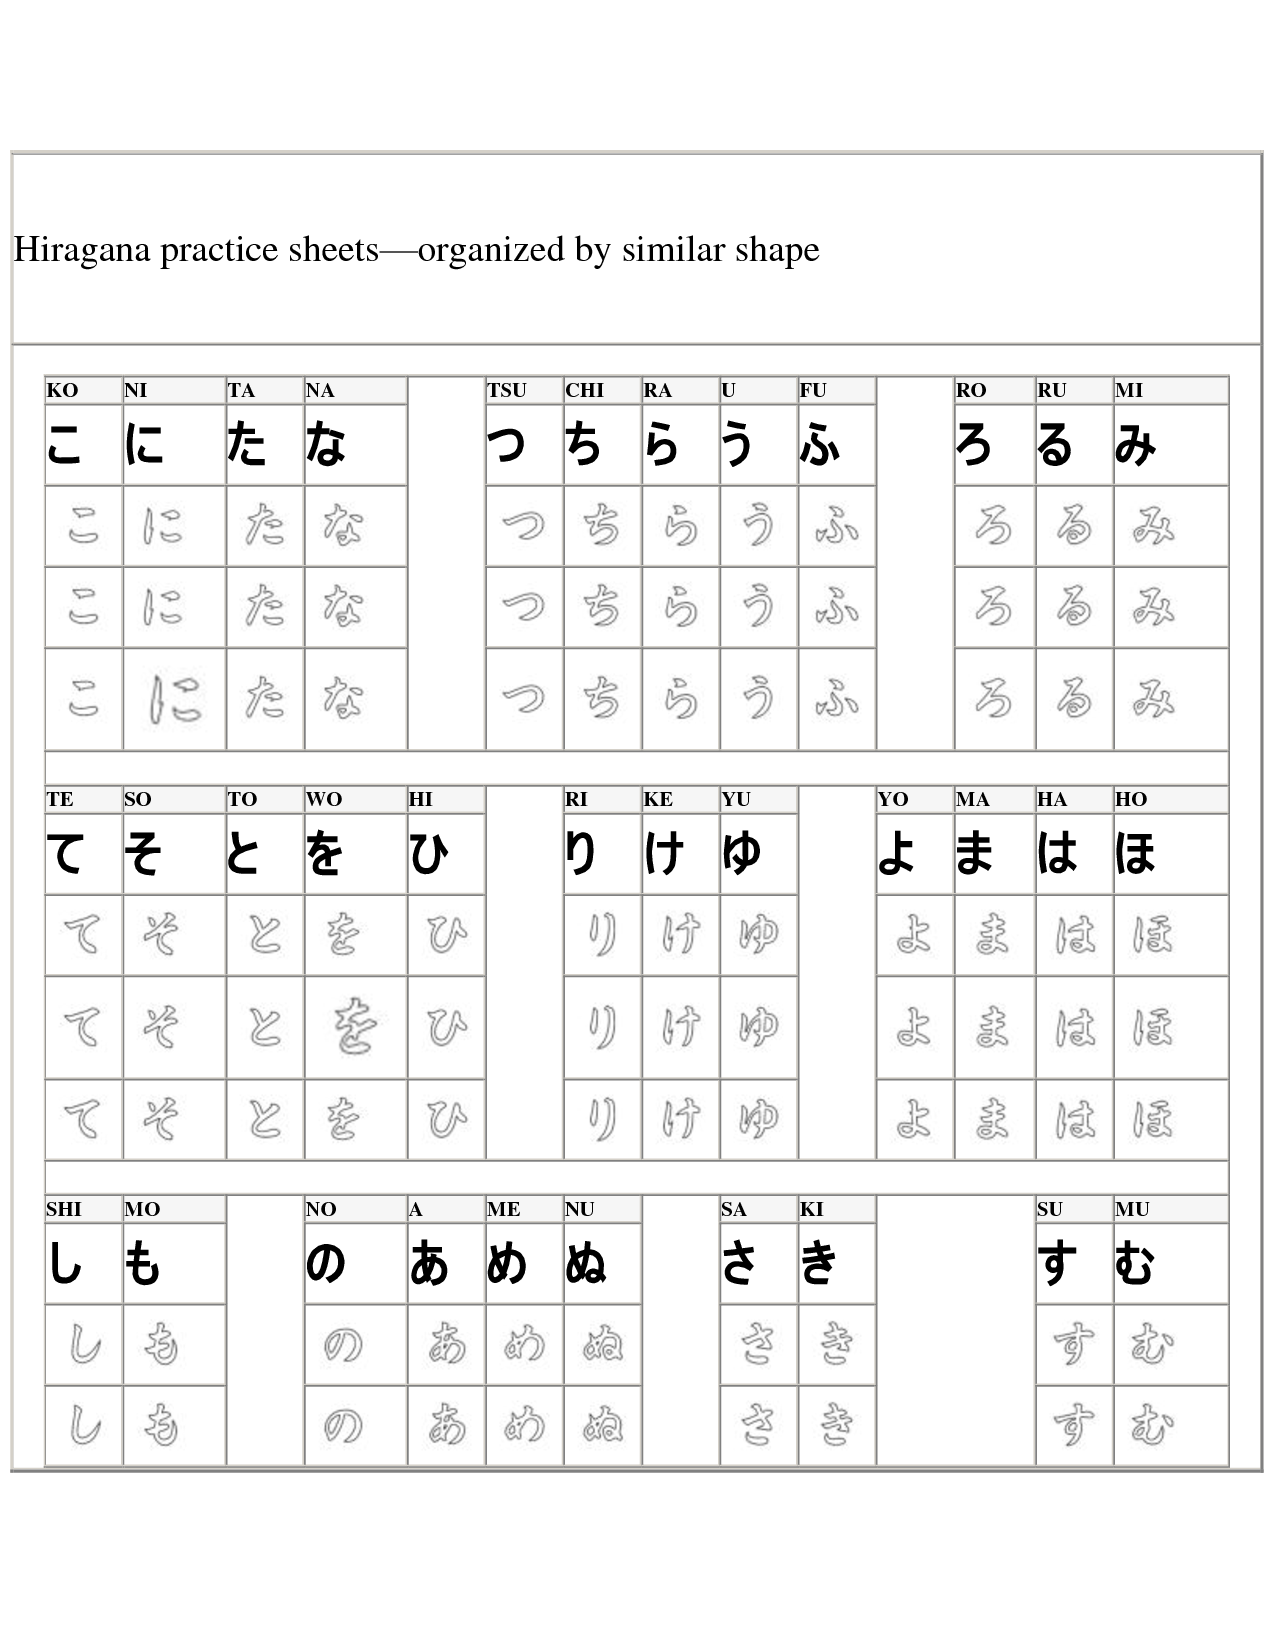 hiragana-practice-sheet-santen-design-sexiezpicz-web-porn